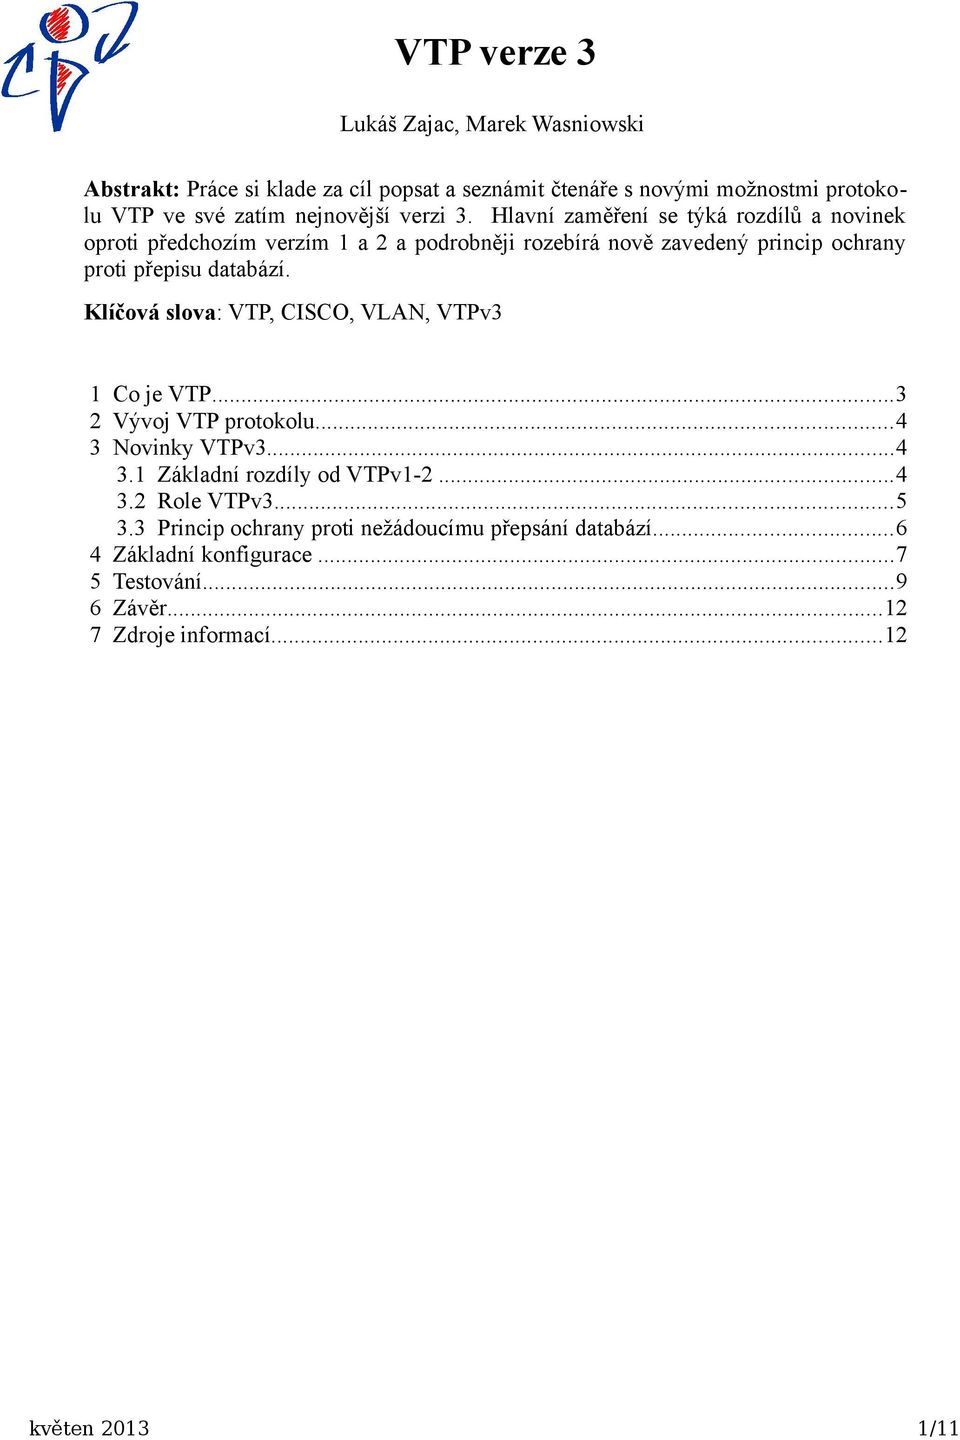 Klíčová slova: VTP, CISCO, VLAN, VTPv3 1 Co je VTP...3 2 Vývoj VTP protokolu...4 3 Novinky VTPv3...4 3.1 Základní rozdíly od VTPv1-2...4 3.2 Role VTPv3...5 3.